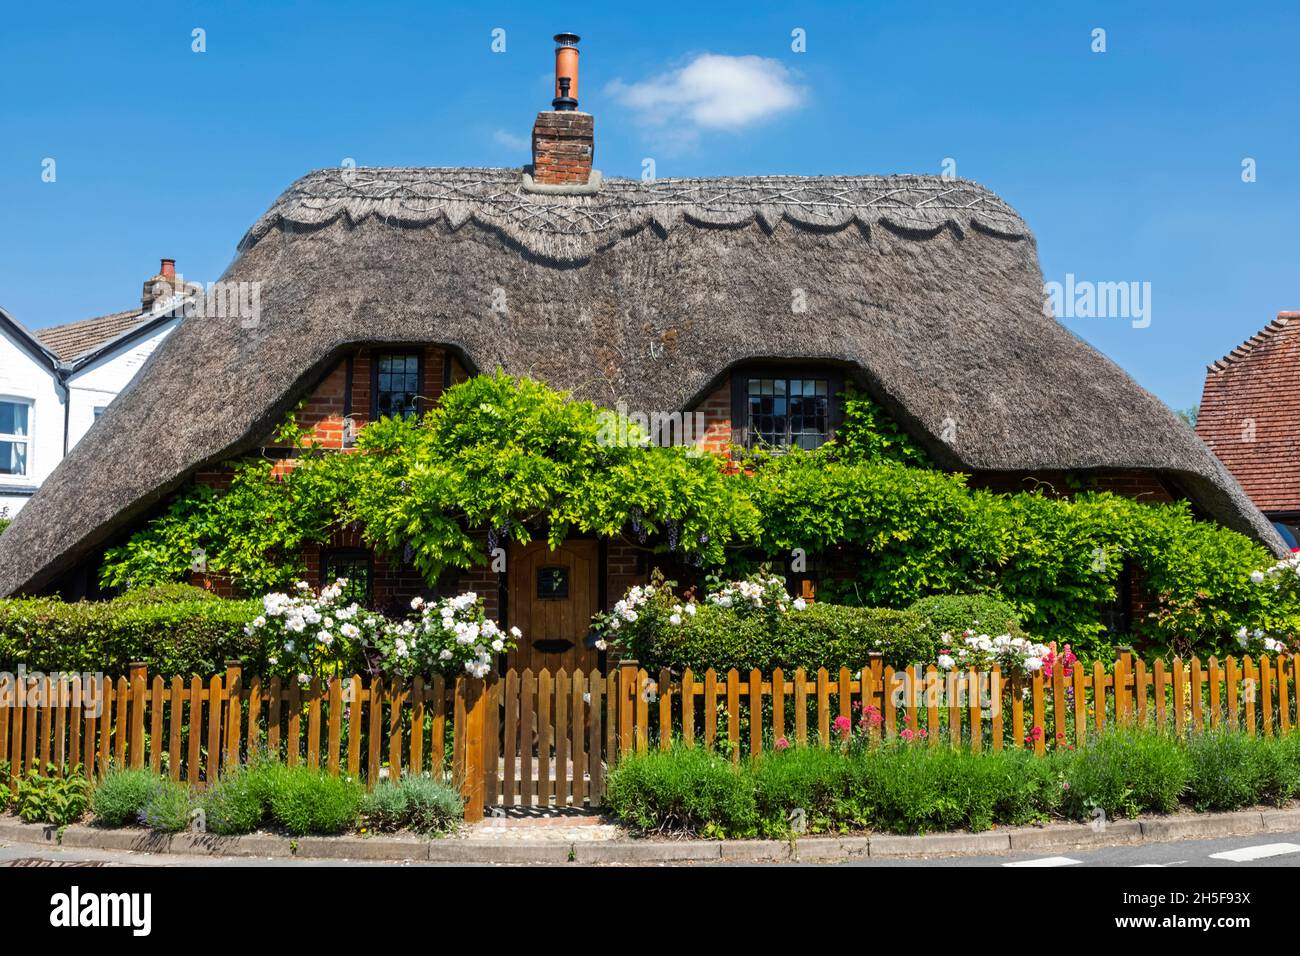 Angleterre, Hampshire, Test Valley, King's Somborne, toit de chaume traditionnel Banque D'Images